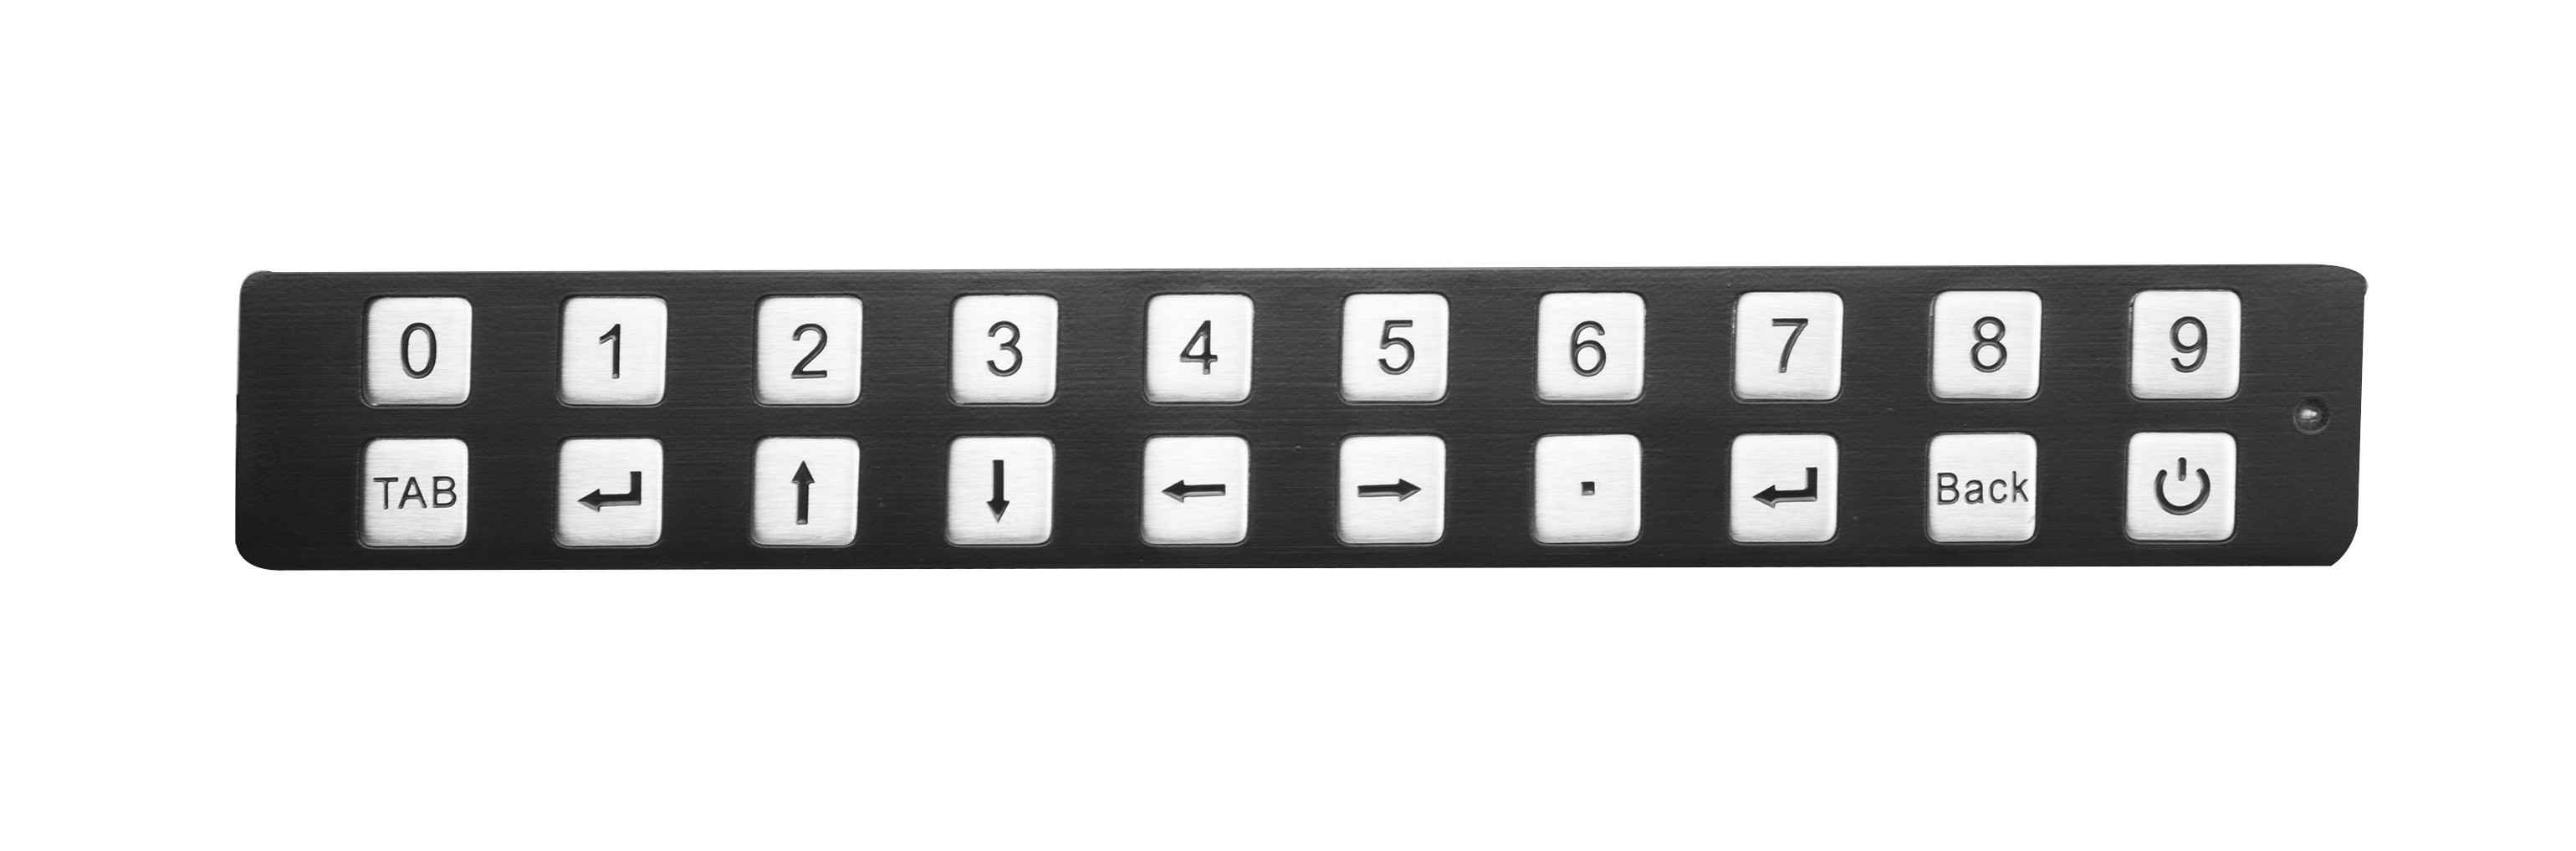 Ruggedized Ip65 20 Keys Black Gate Keypad 304 Stainless Steel